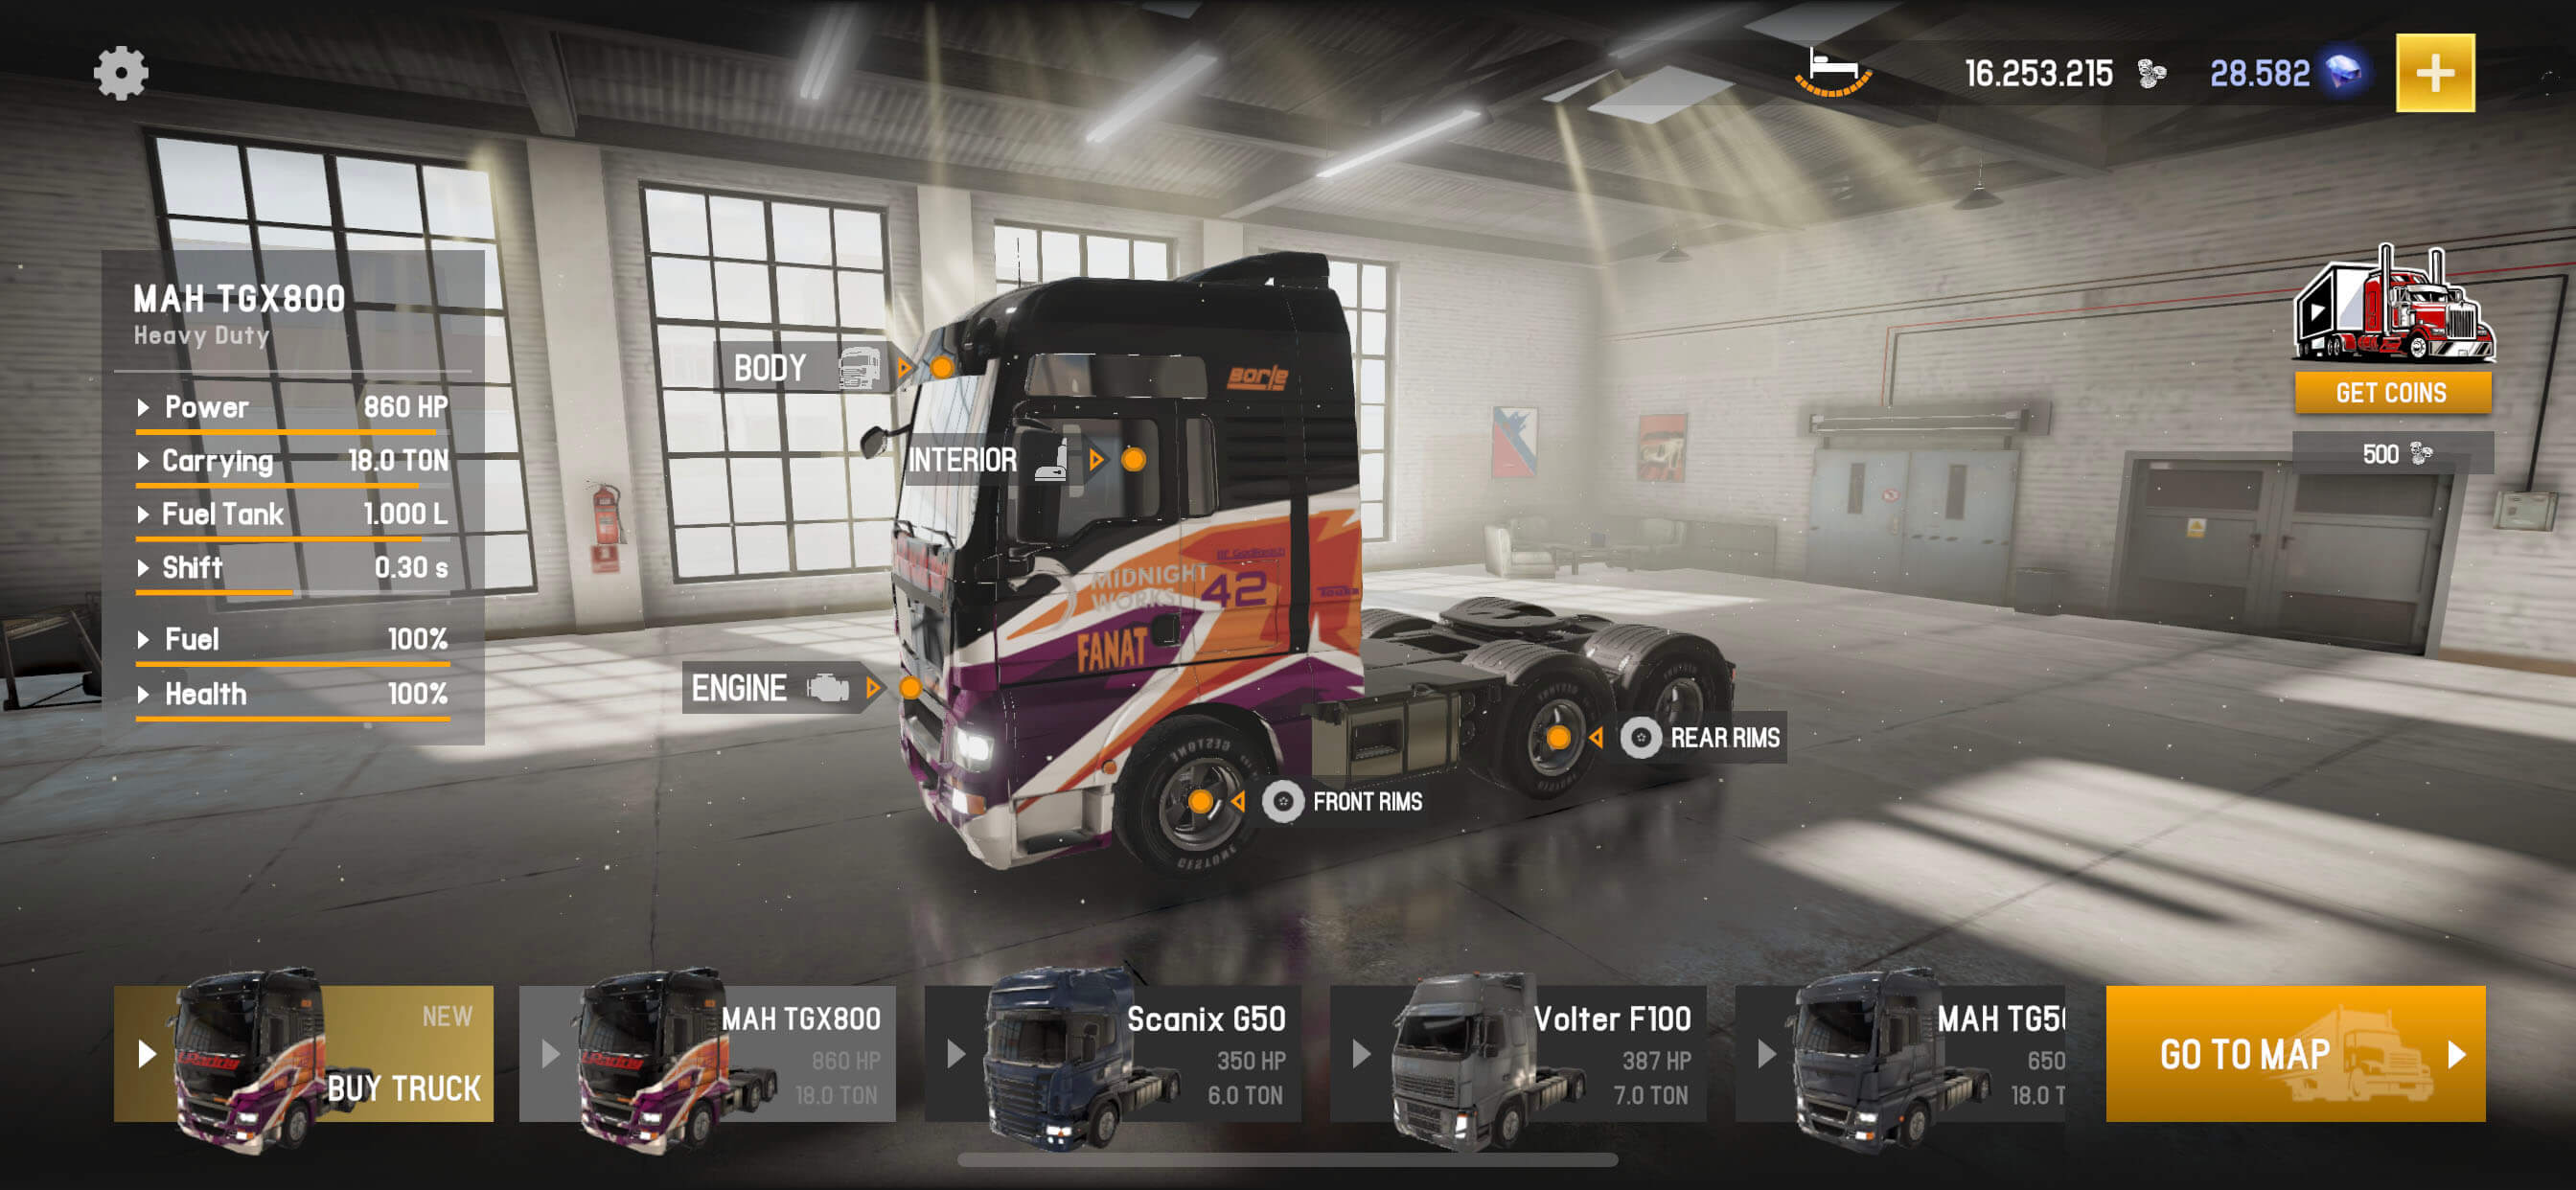 nl-truck-games-simulator-cargo-mod-ios2.jpg